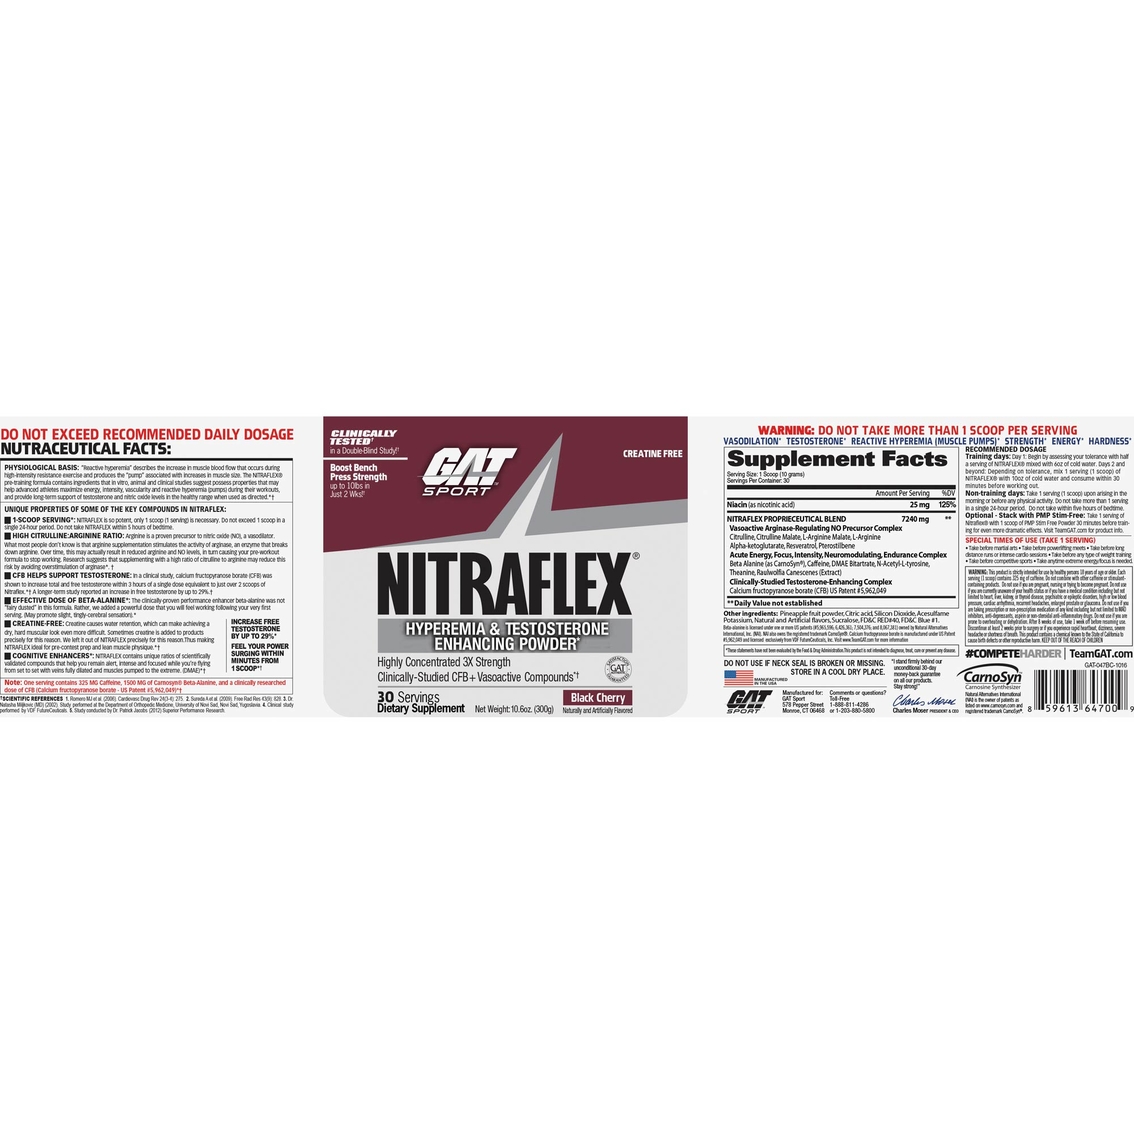 GAT Nitraflex Hyperemia and Testosterone Enhancing Powder, 30 Servings - Image 2 of 2